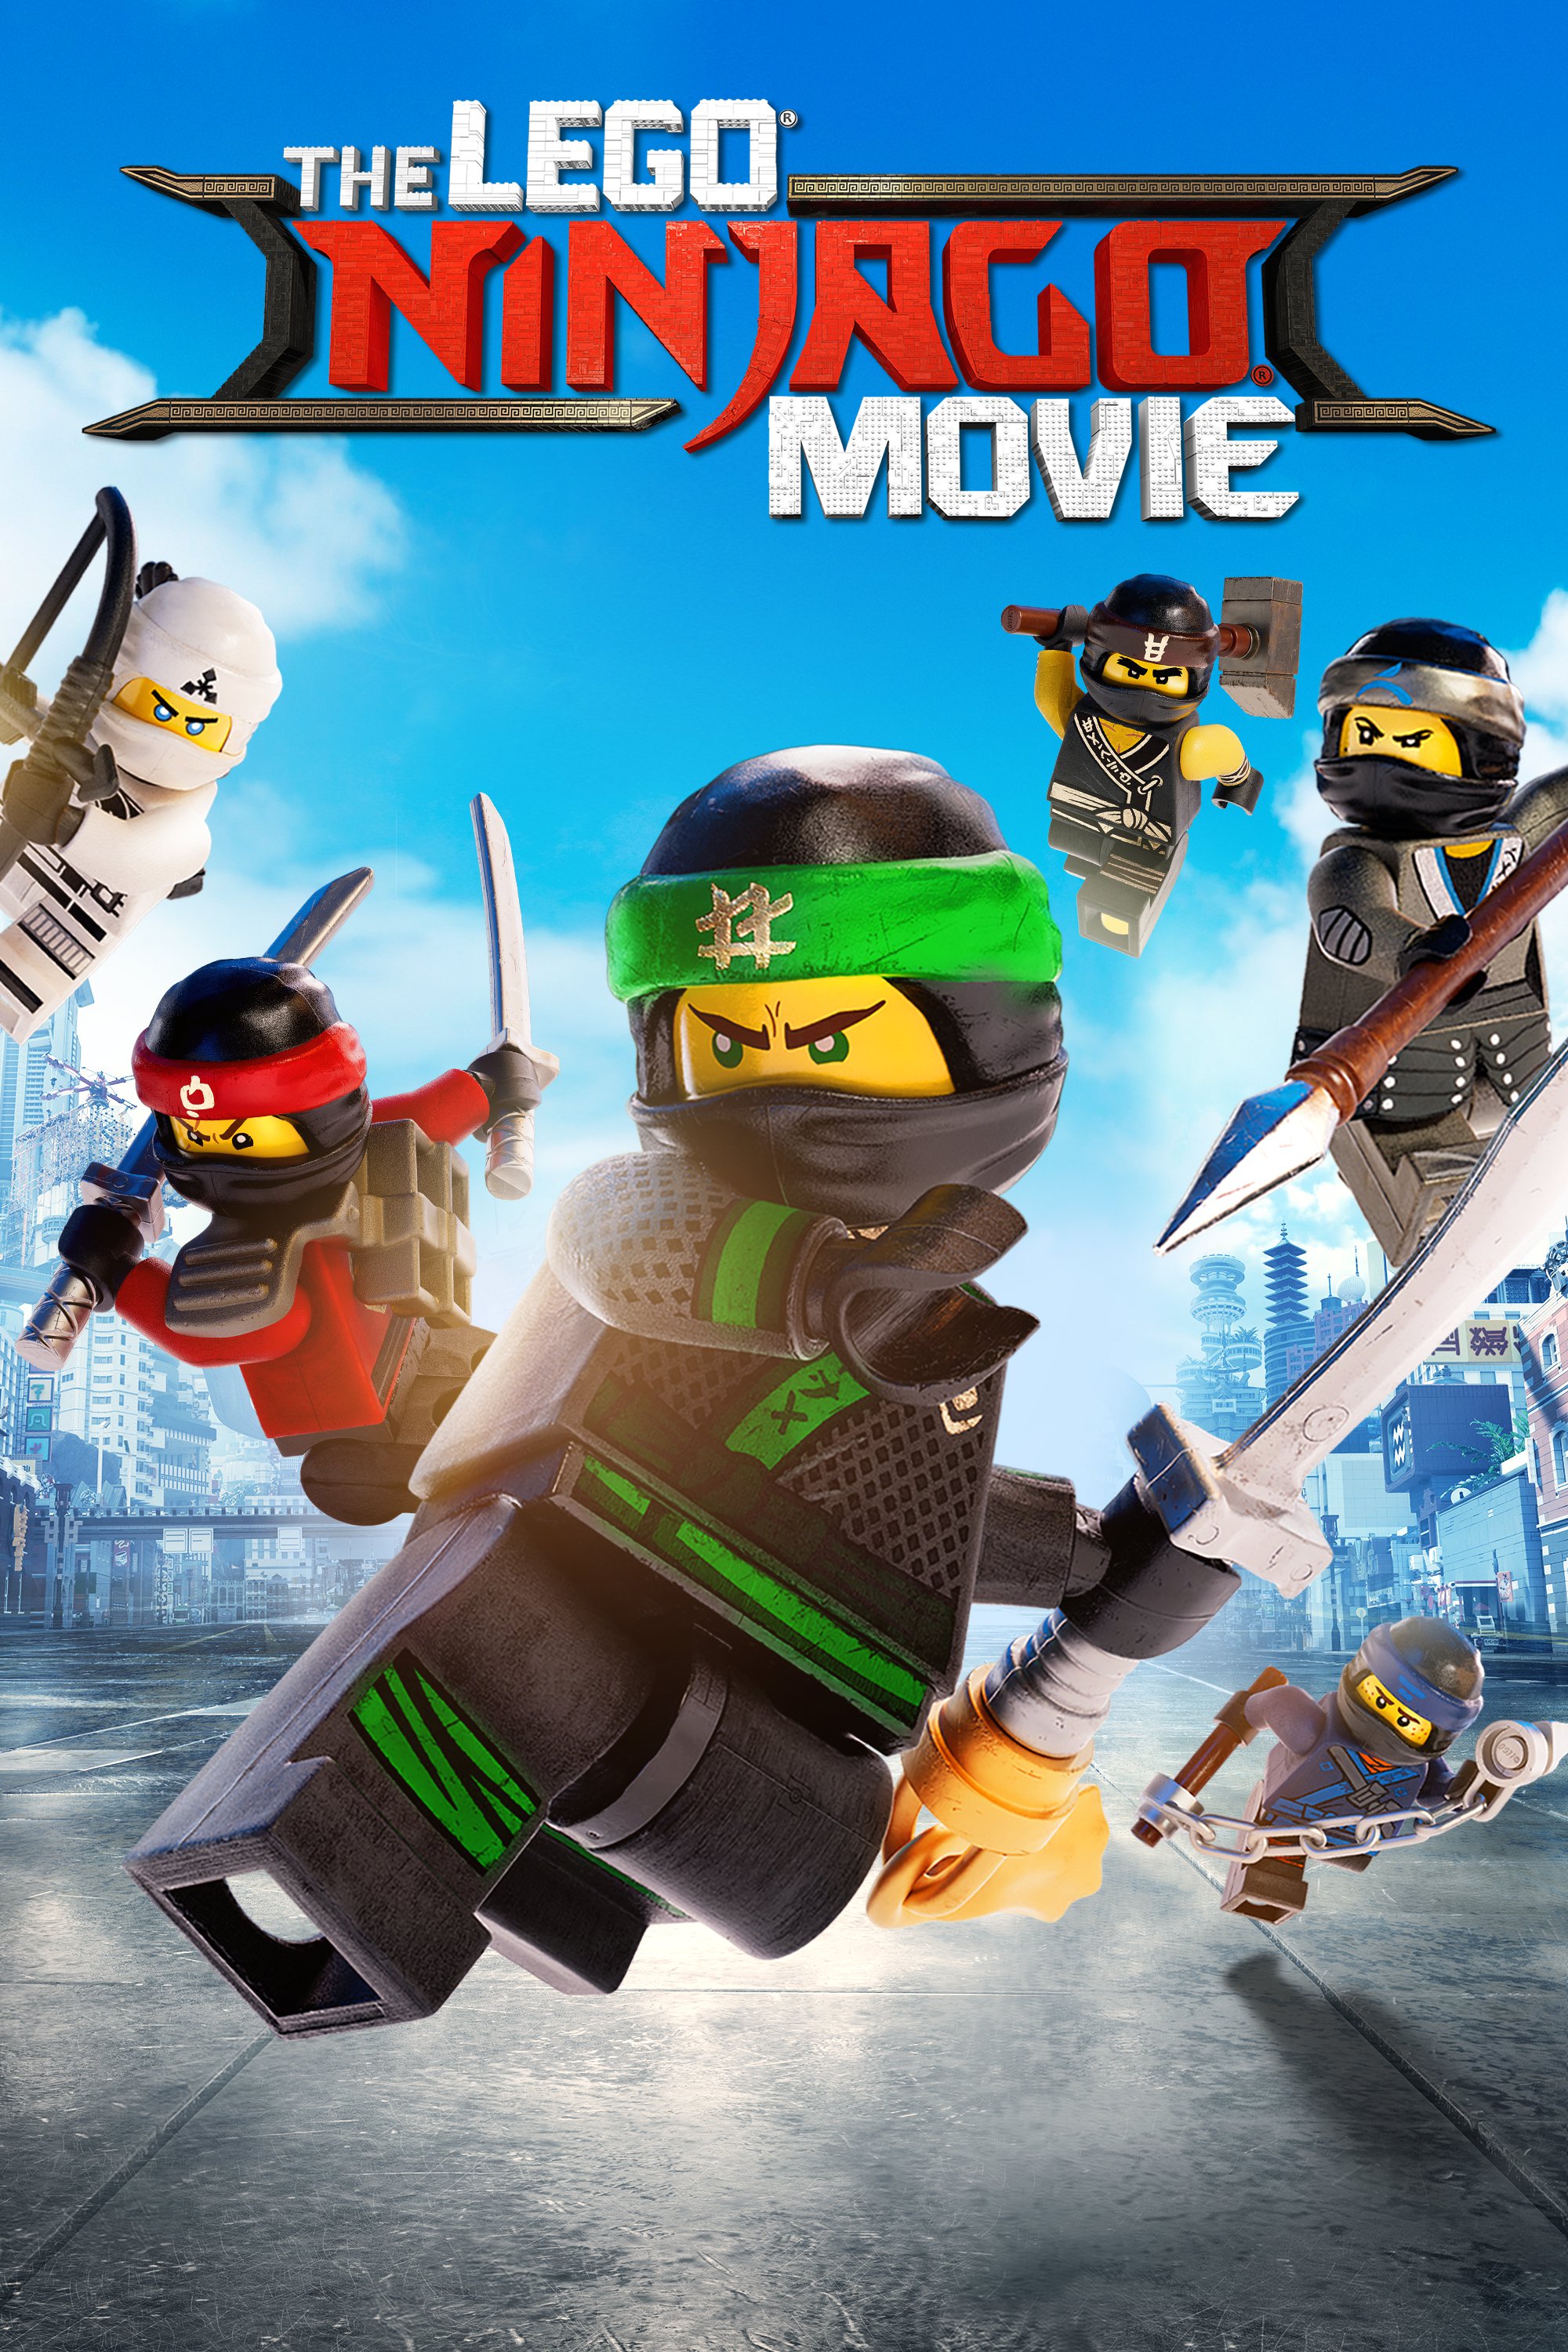 Plakat von "The LEGO Ninjago Movie"